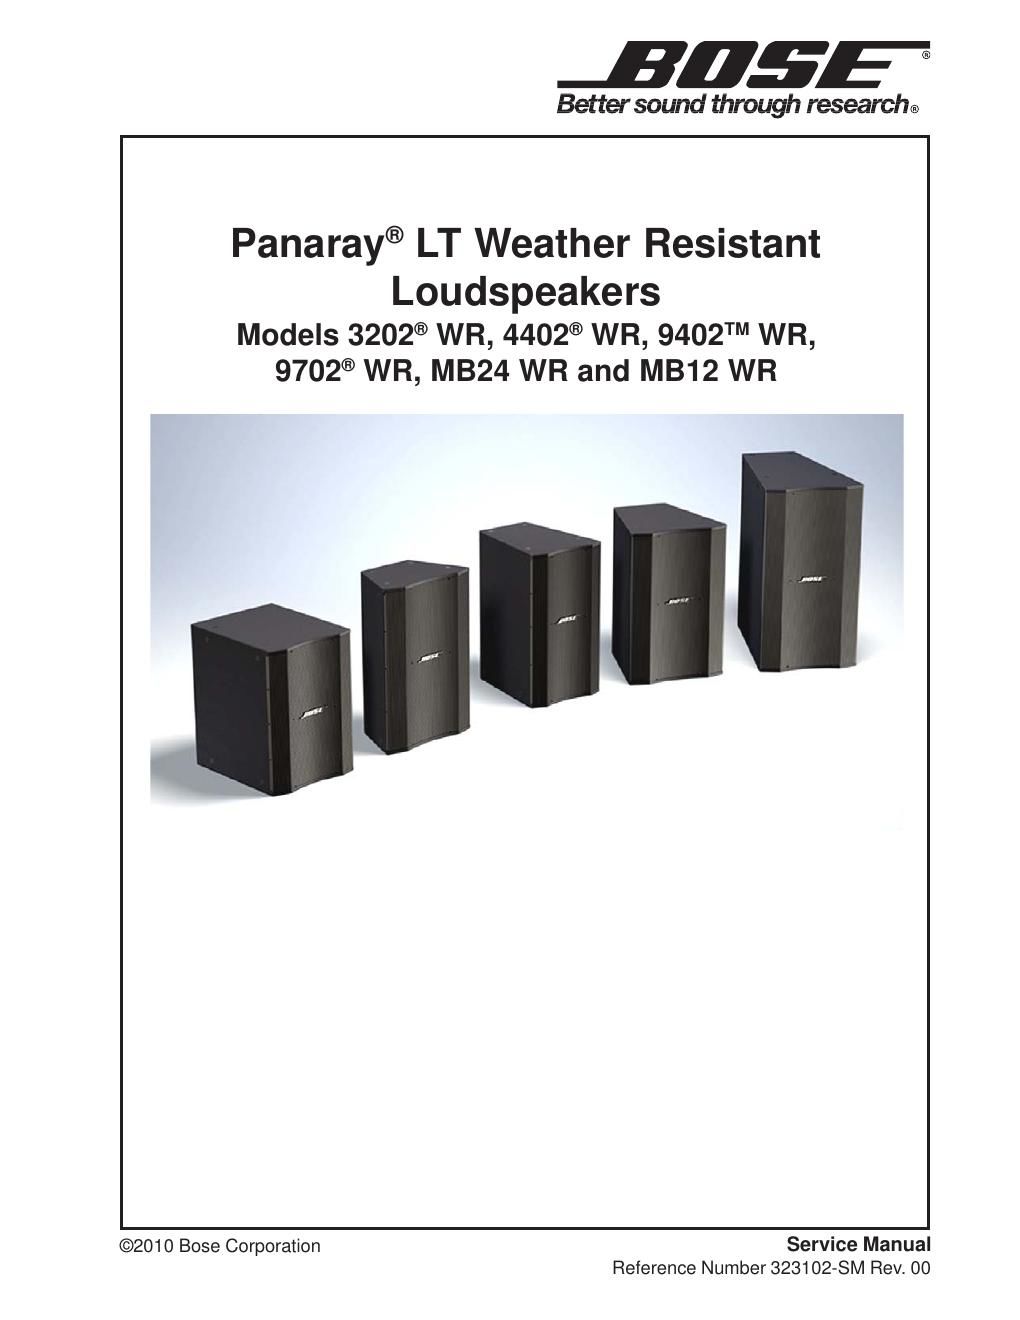 bose panaray lt weather resistant wr loudspeakers service manual